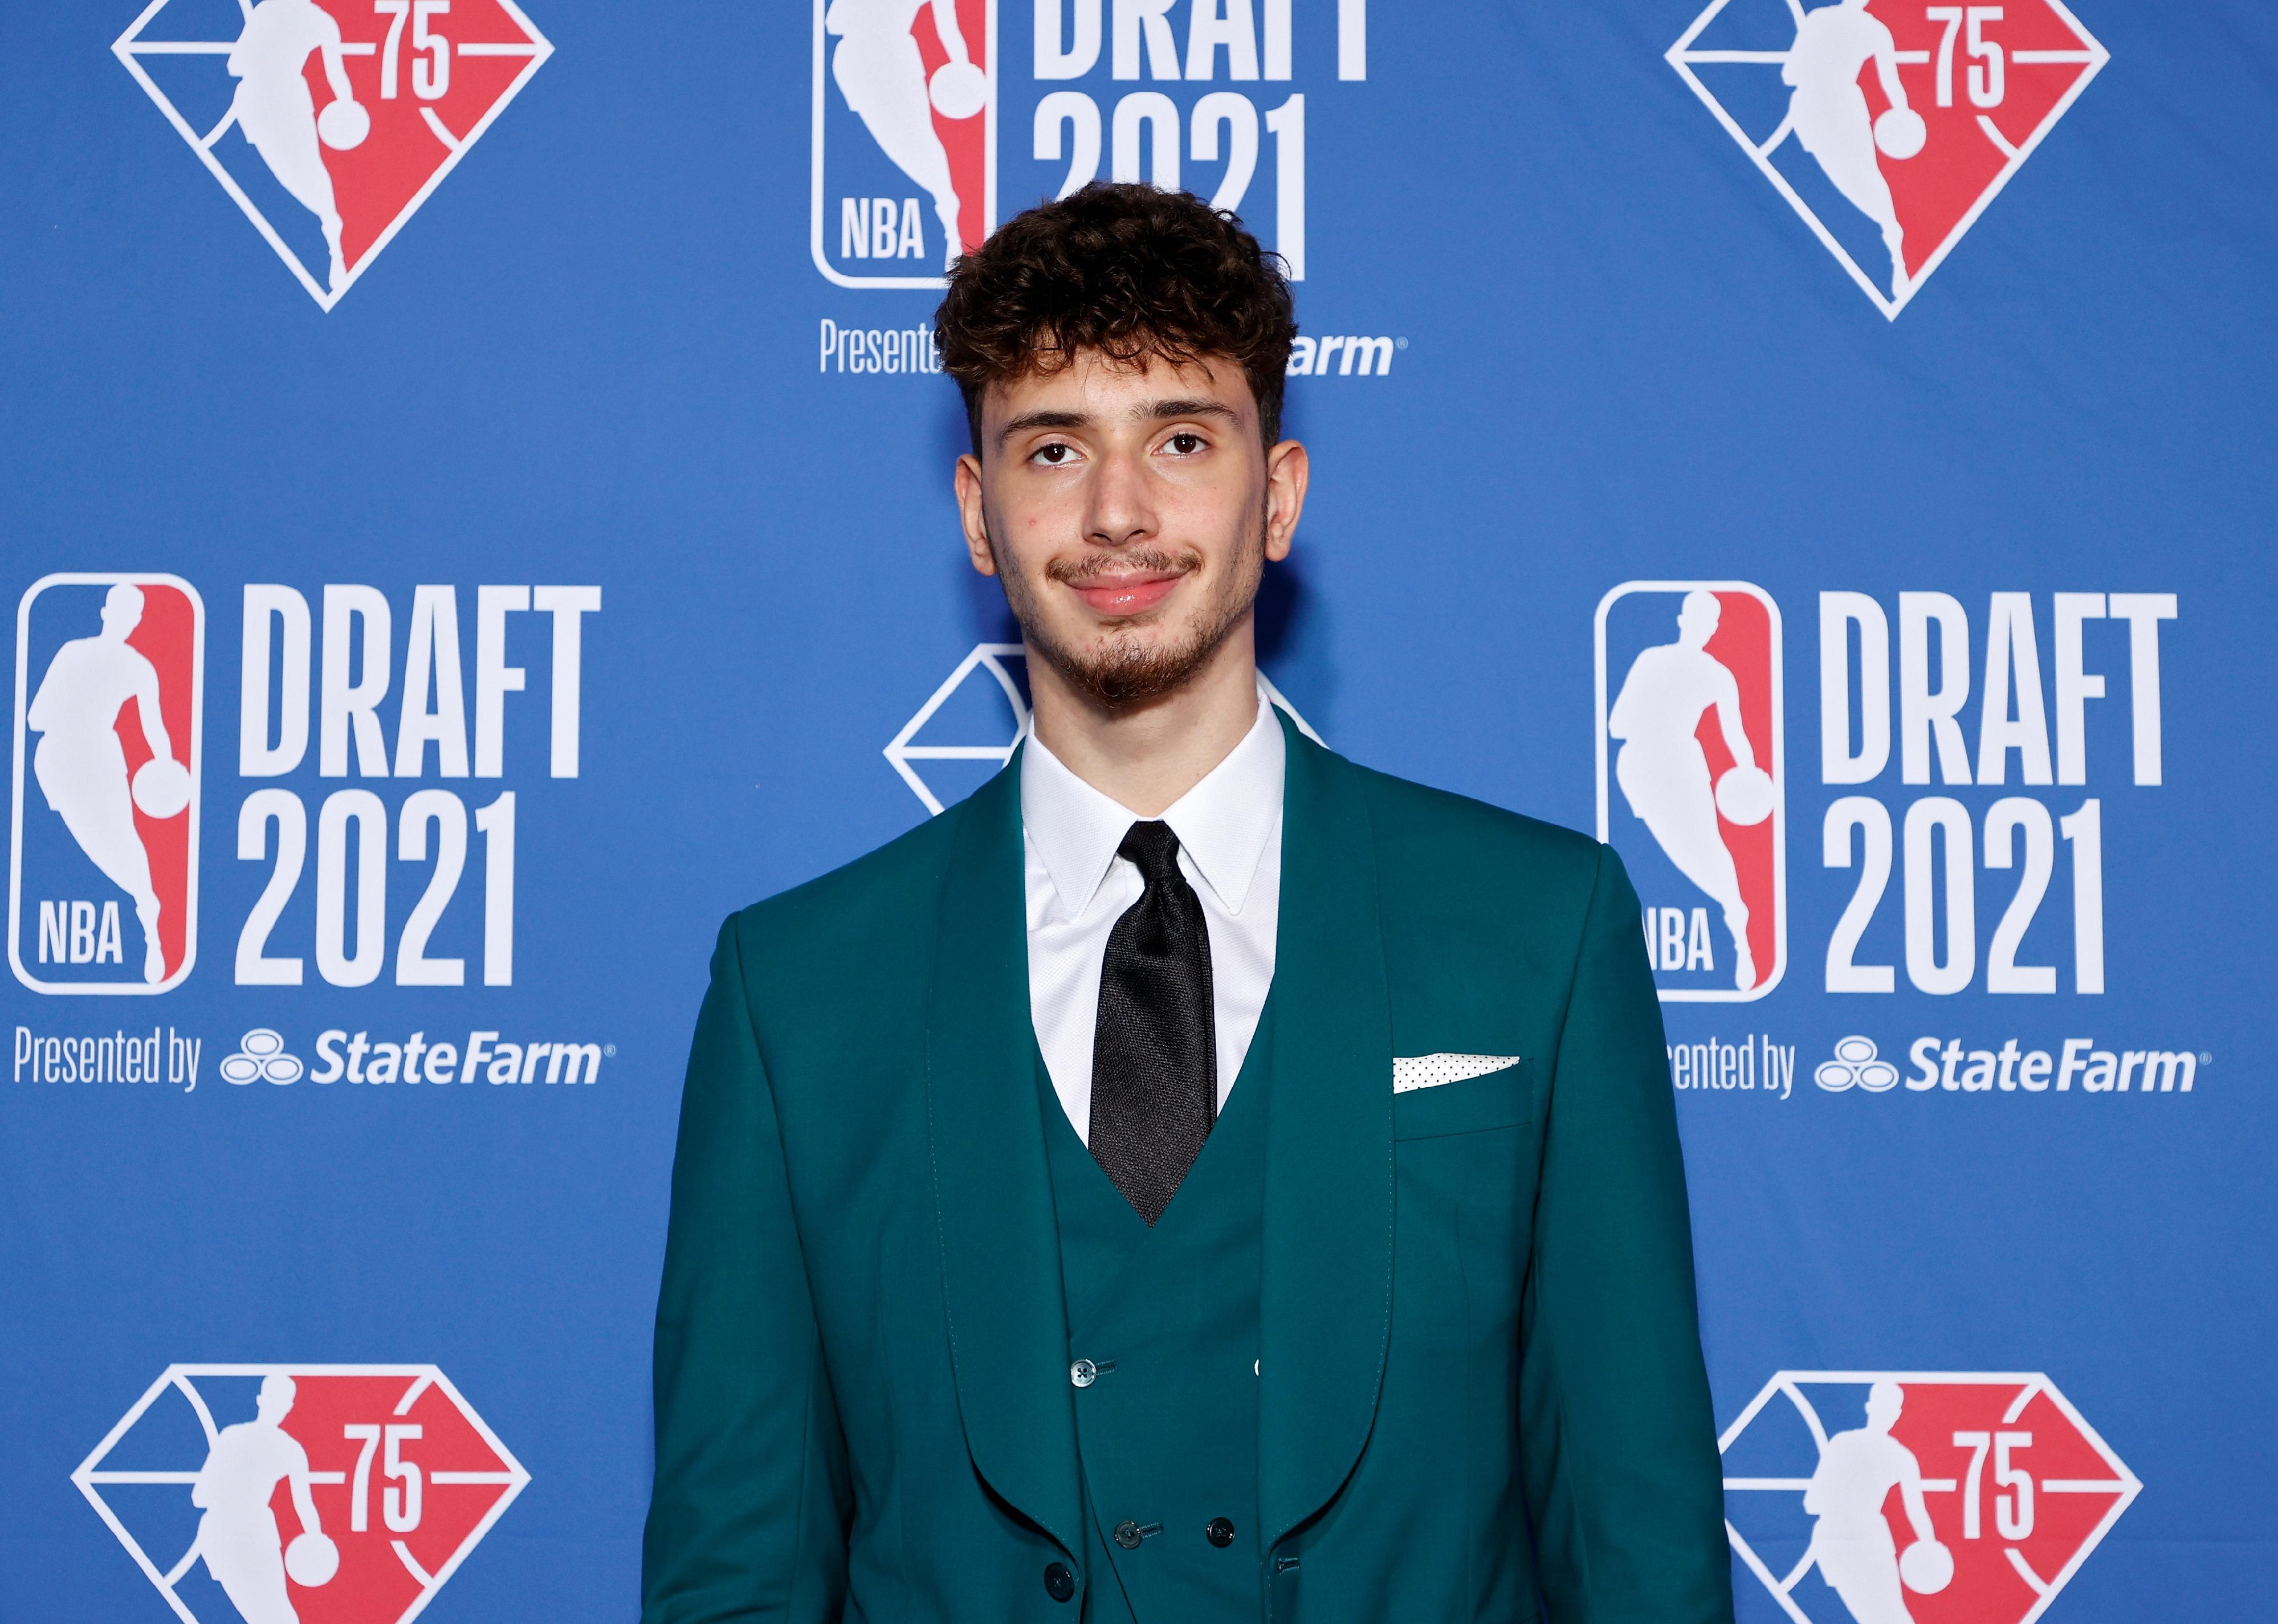 Alperen Sengun poses for photos on the red carpet during the 2021 NBA Draft.